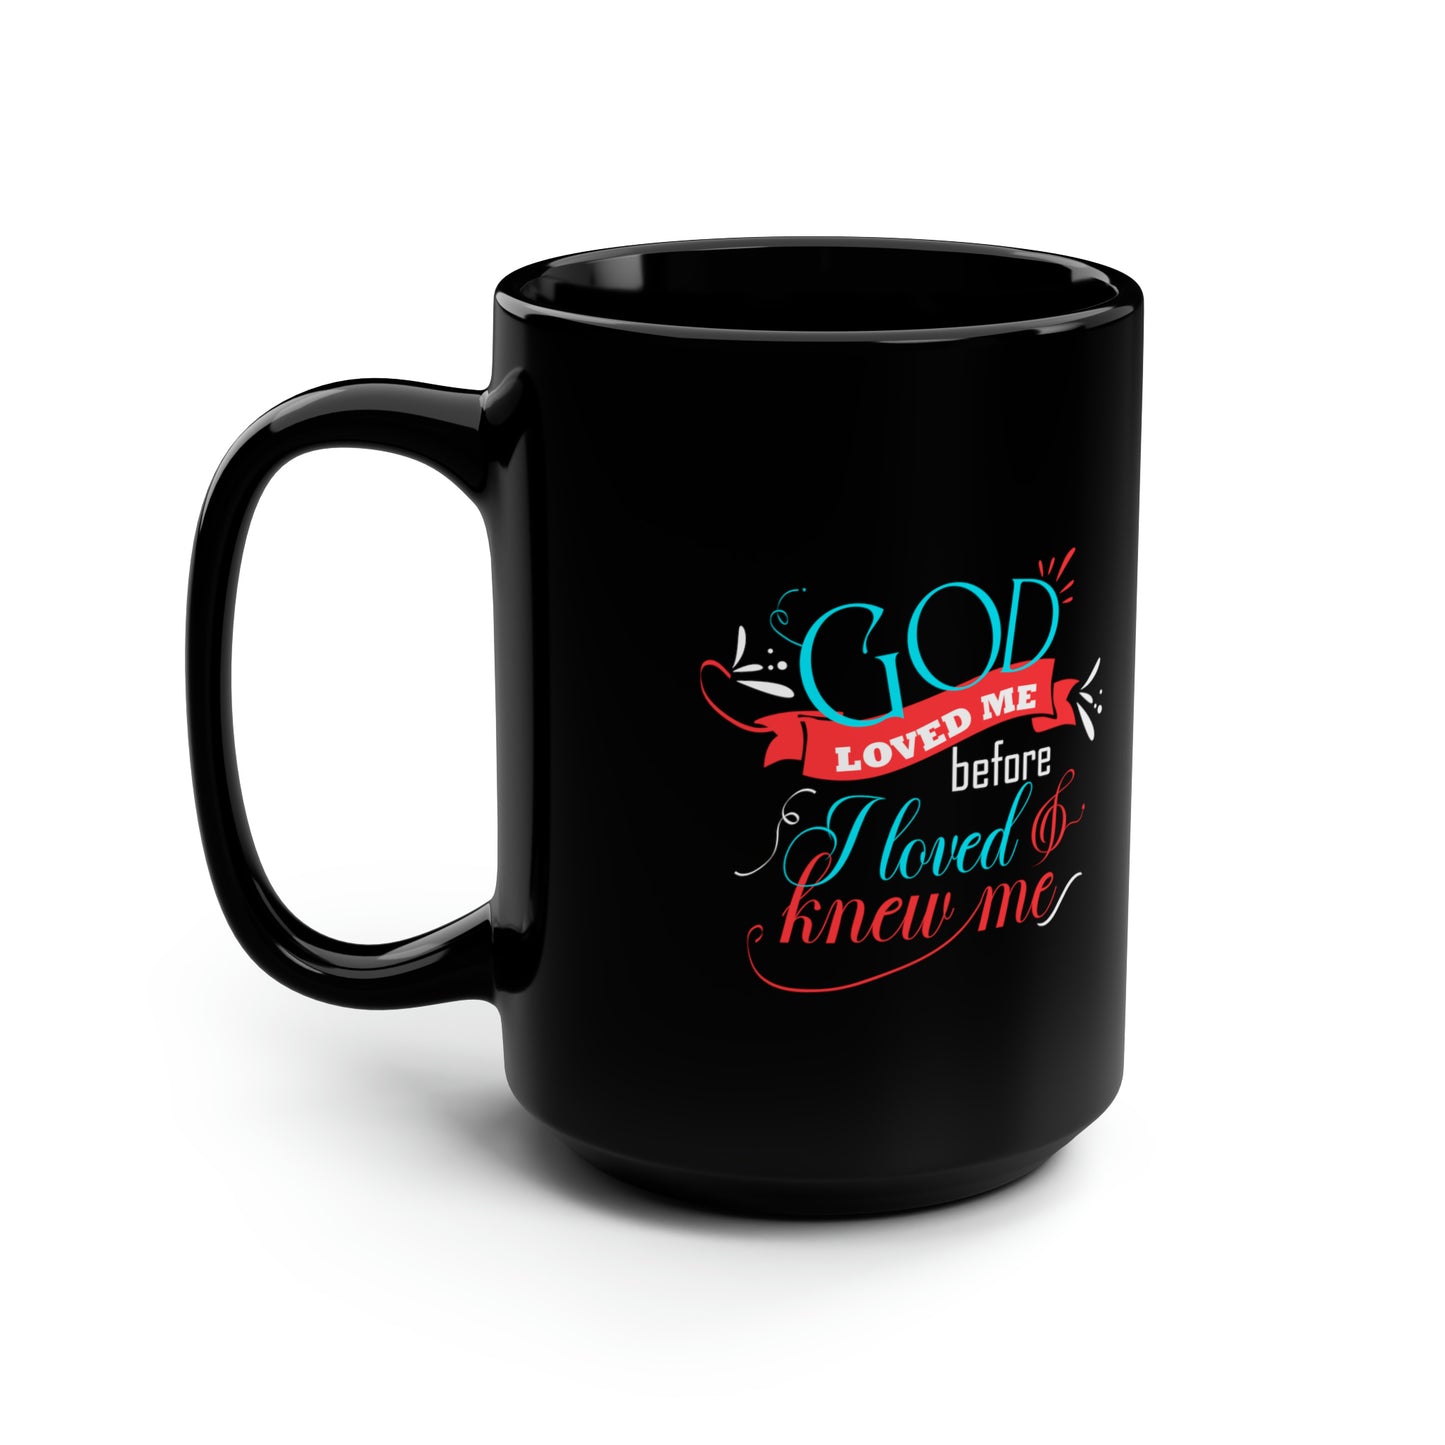 God Loved Me Before I Loved & Knew Me Black Ceramic Mug, 15oz (double sided print) Printify